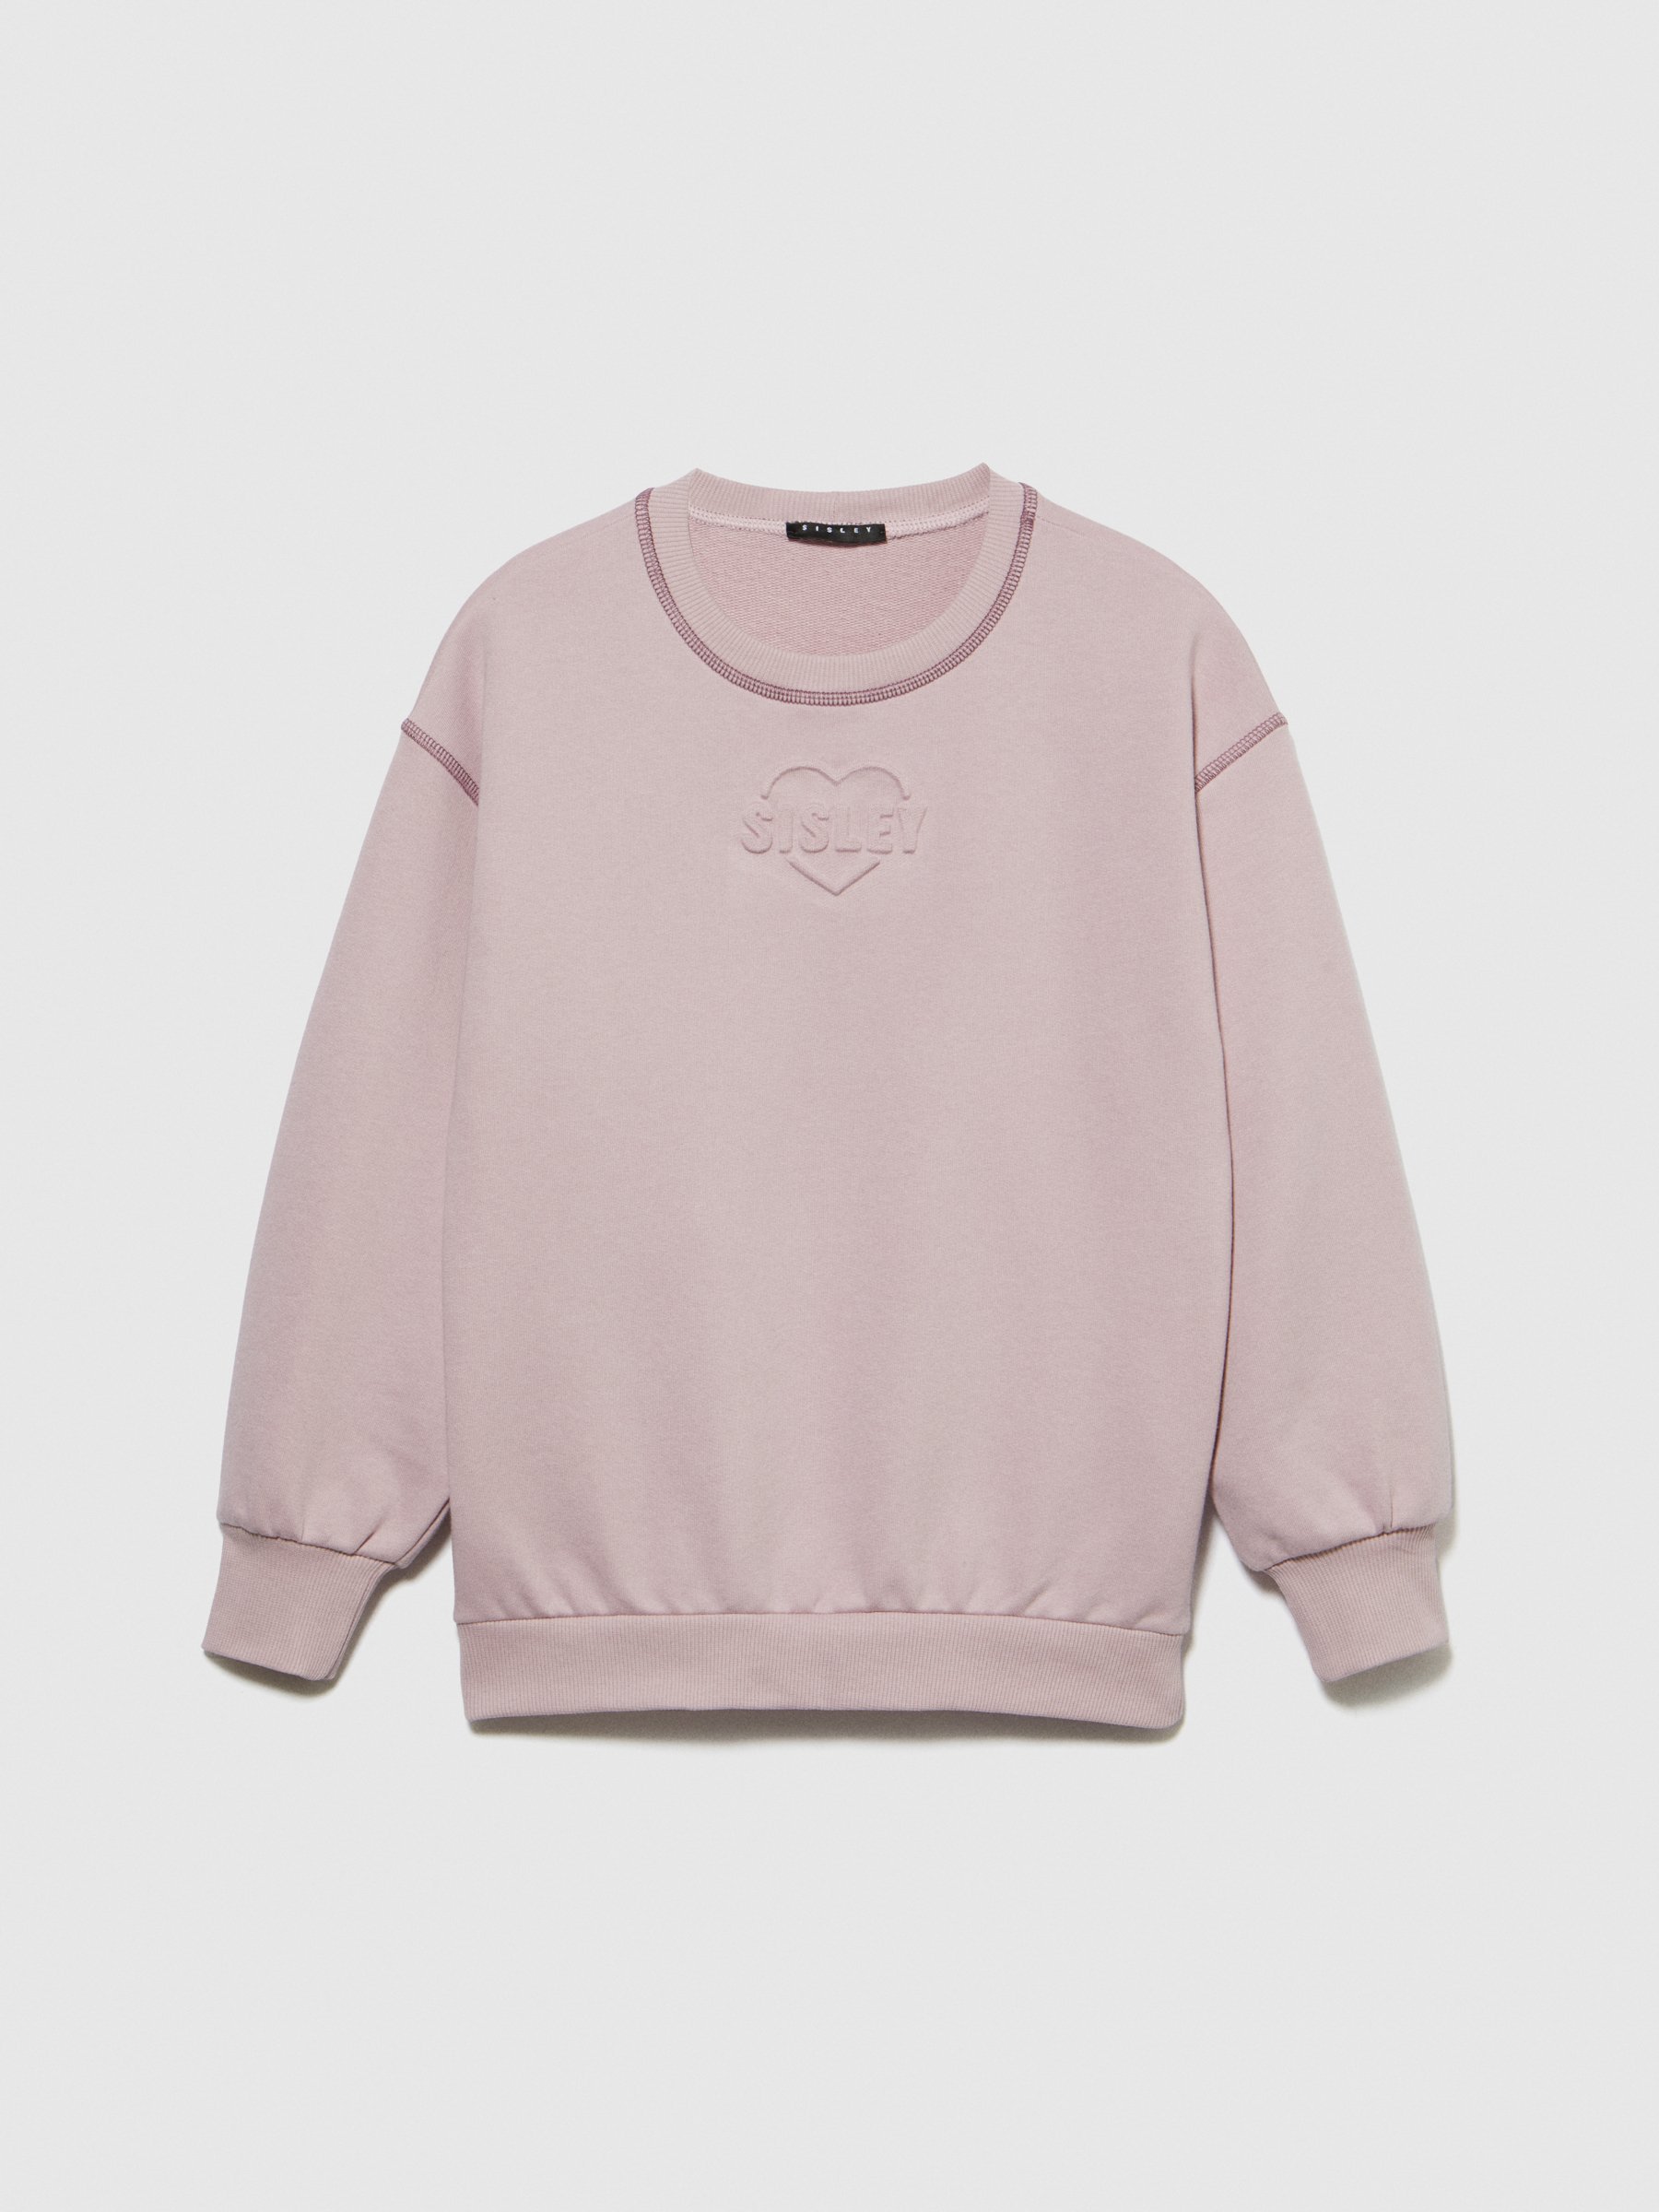 Sisley Young - Sweatshirt With Embossed Print, Woman, Pastel Pink, Size: KL